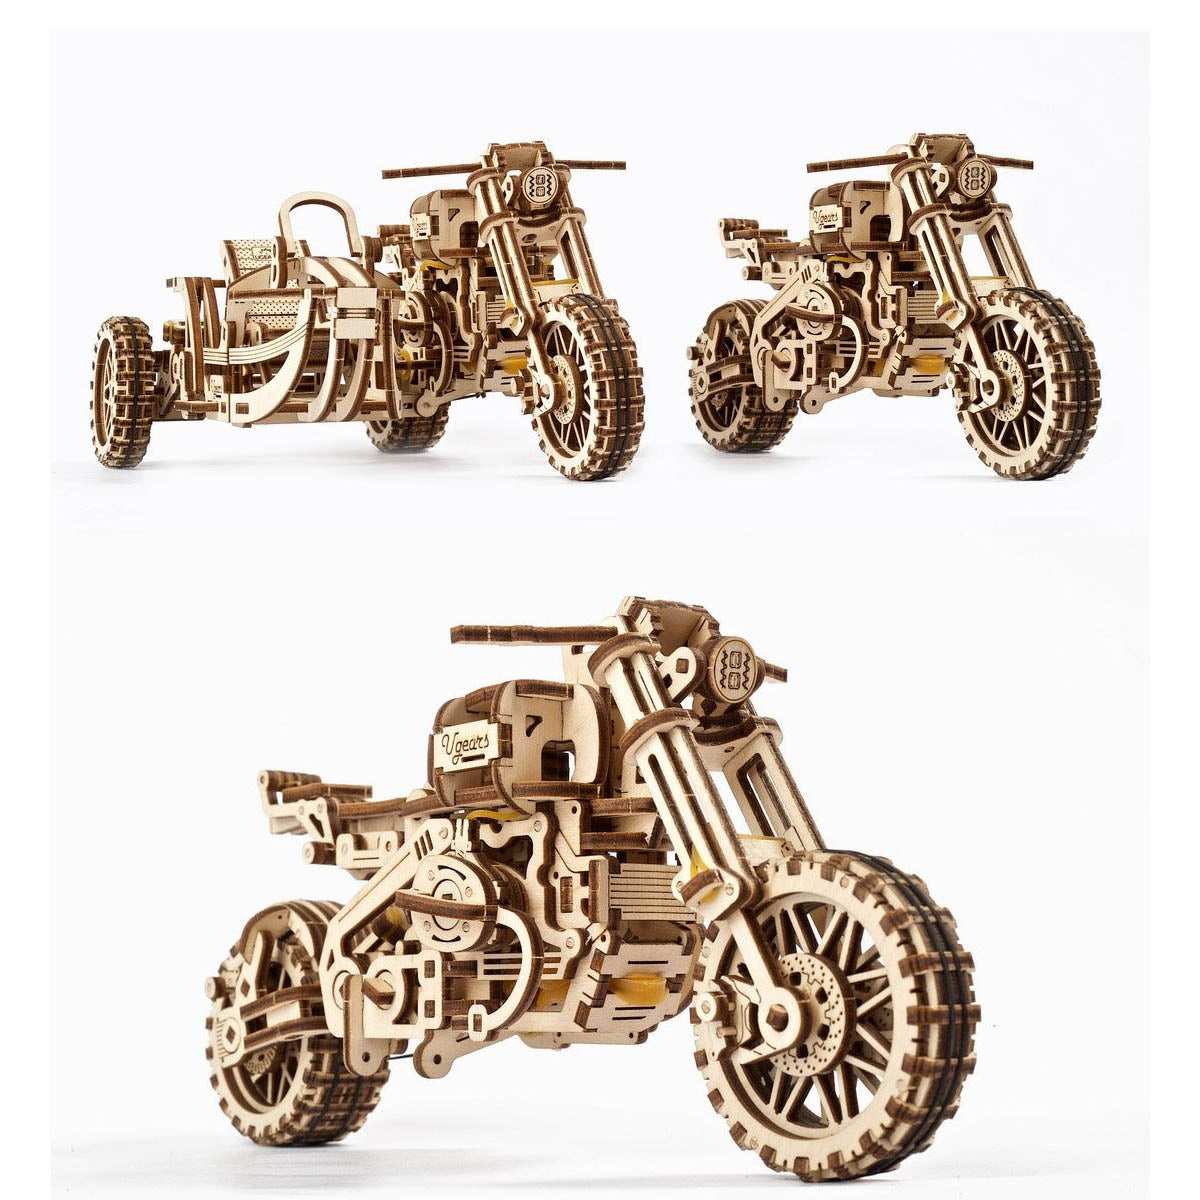 Modell-Bausatz - Mechanisches Holz-Motorrad Scrambler UGR-10 mit Beiwagen